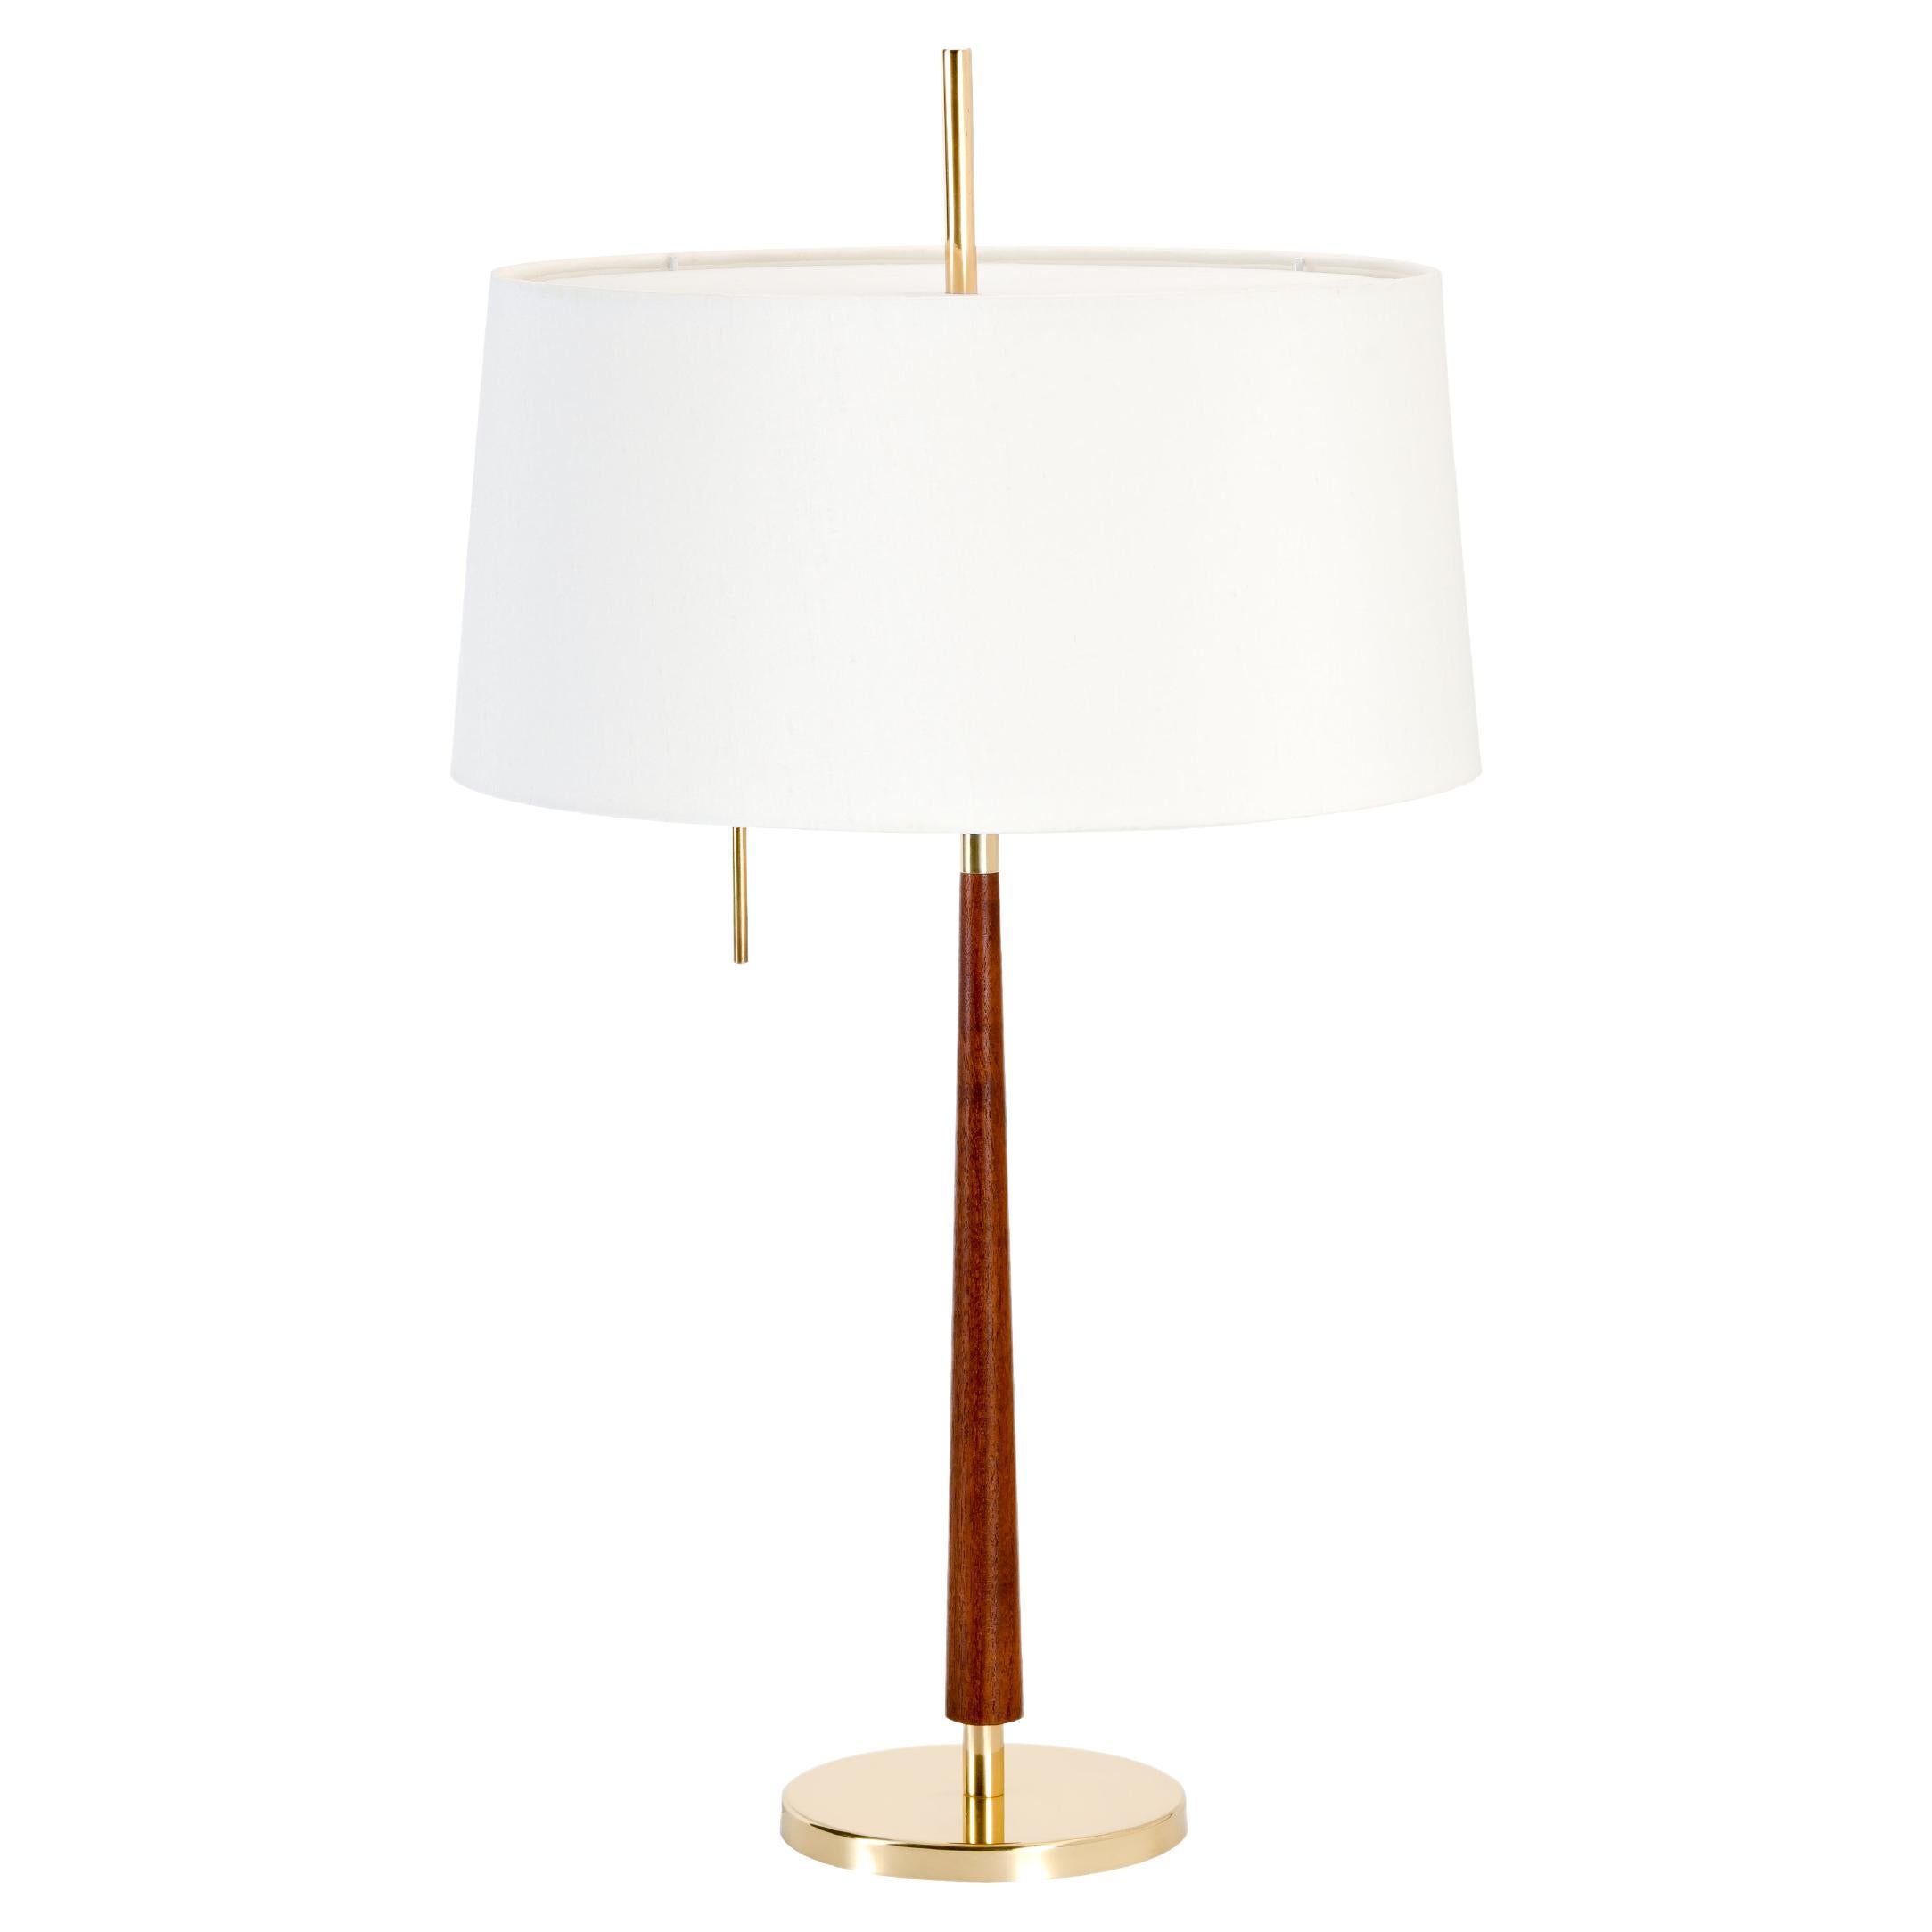 Gunnar Asplund GA6 Table Lamp, Designed in 1930's